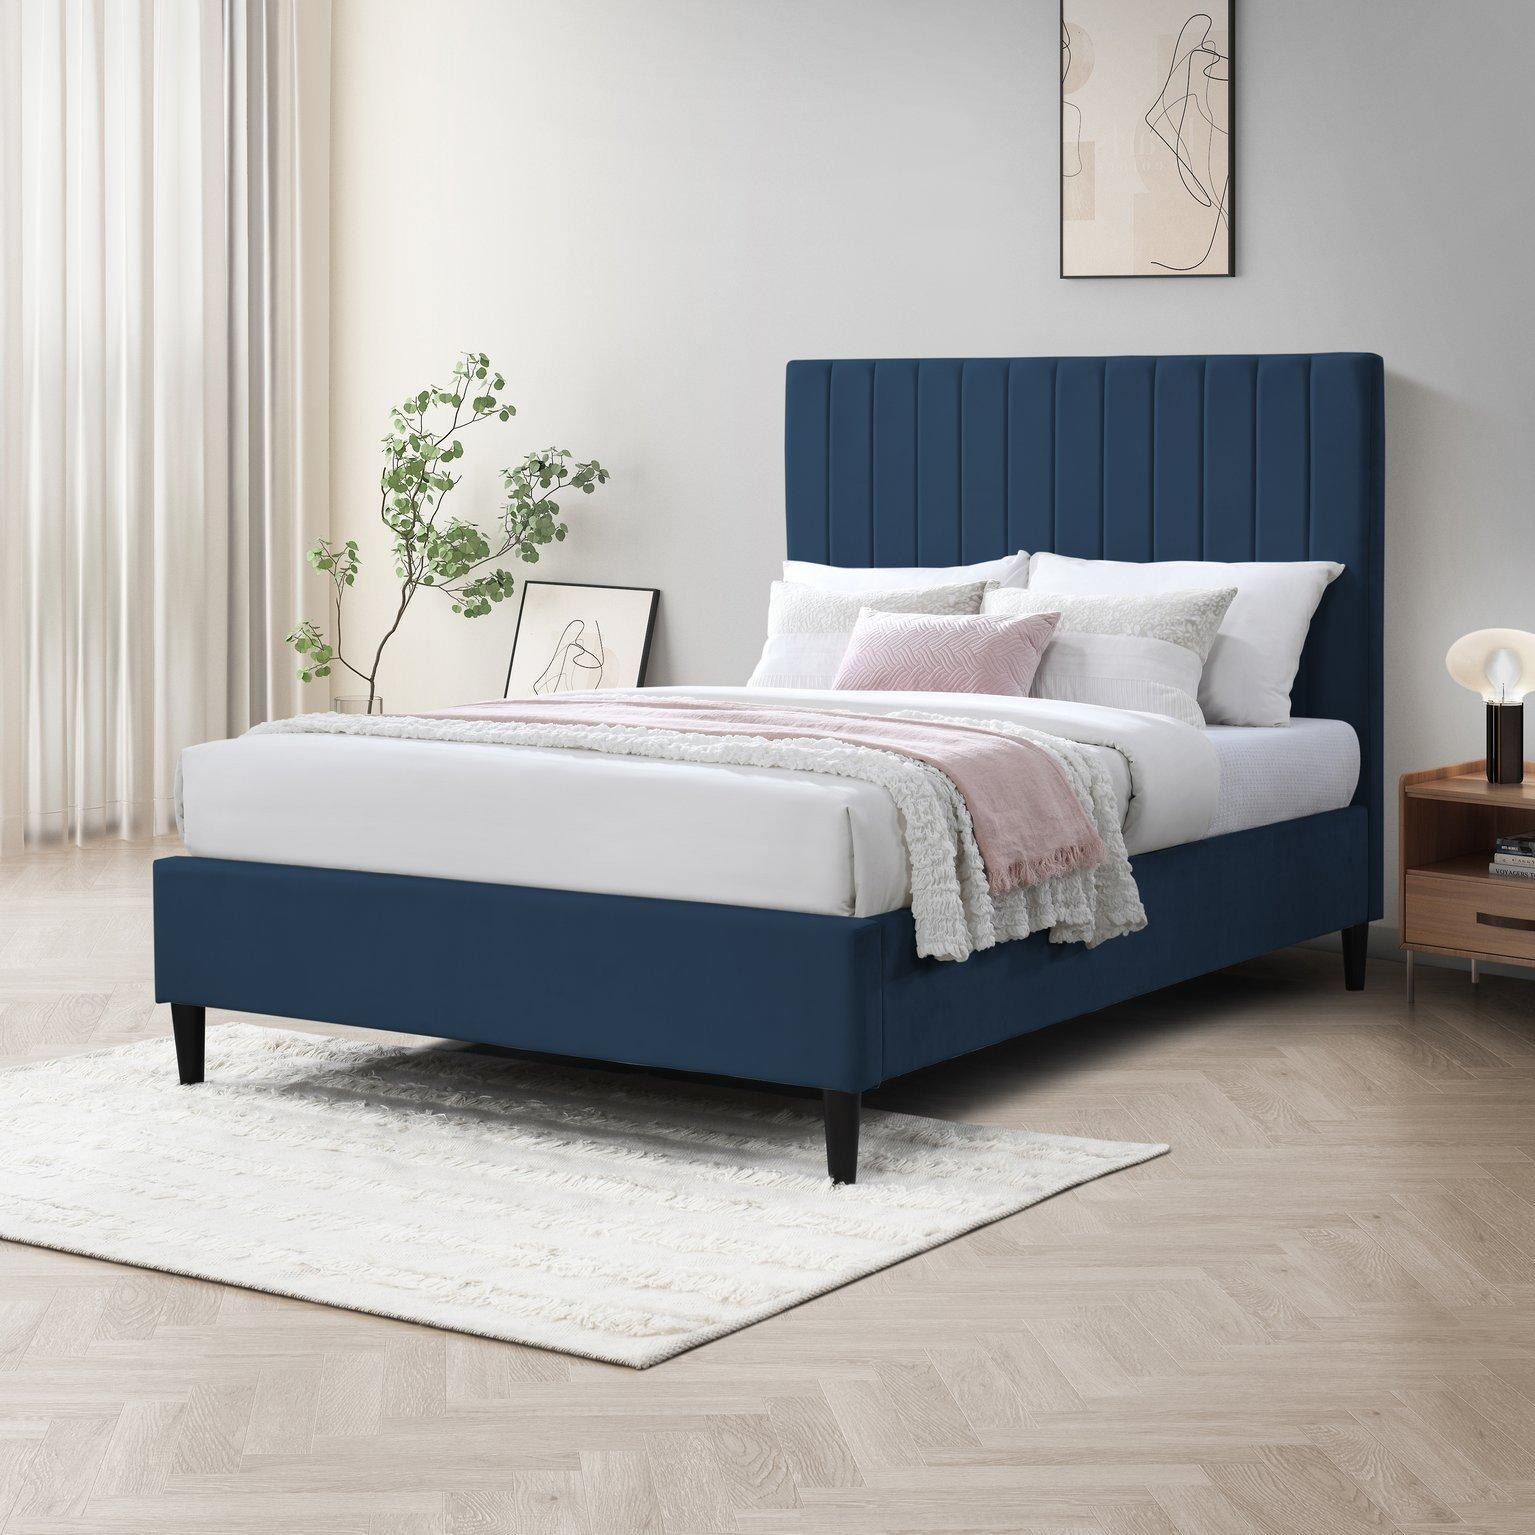 Aster Classic Solid Wood Bed Frame Upholstered in Velvet - image 1